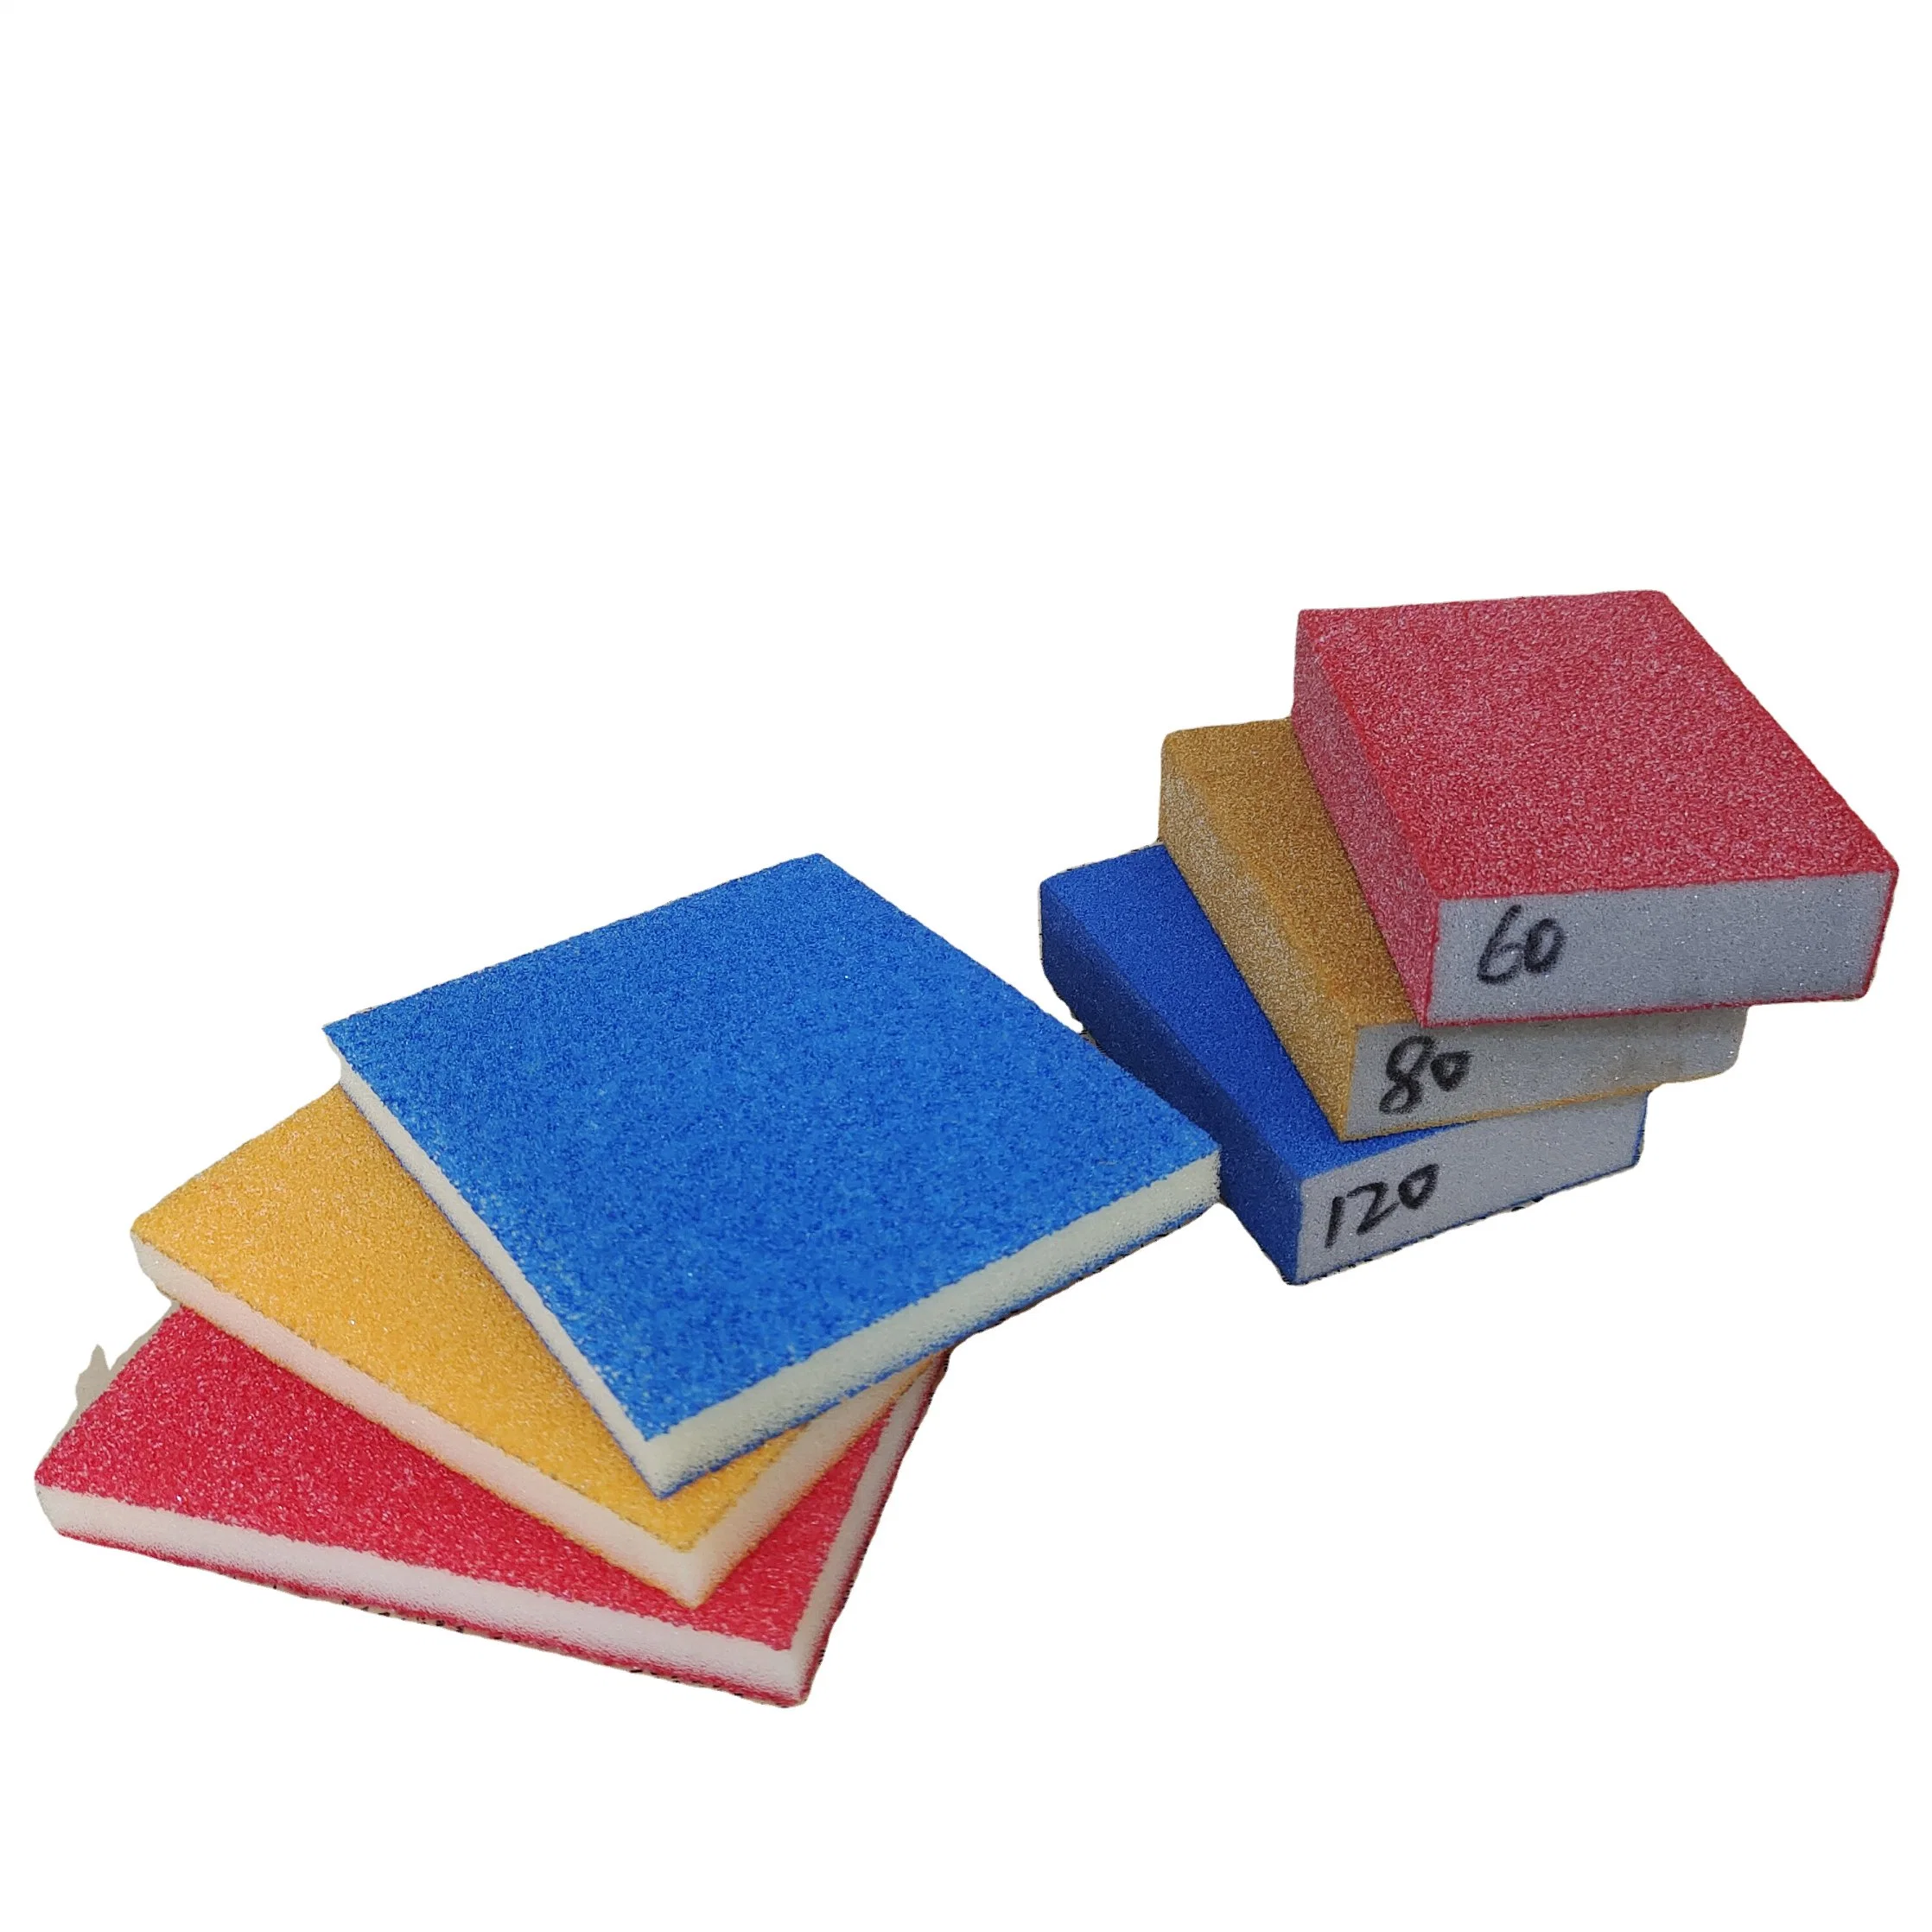 Cilorful Sand Sponges 100X70X25mm Sanding Sponge Block 3.9"X2.7"X1" Abrasive Tools Foam Rubber Sanding Block